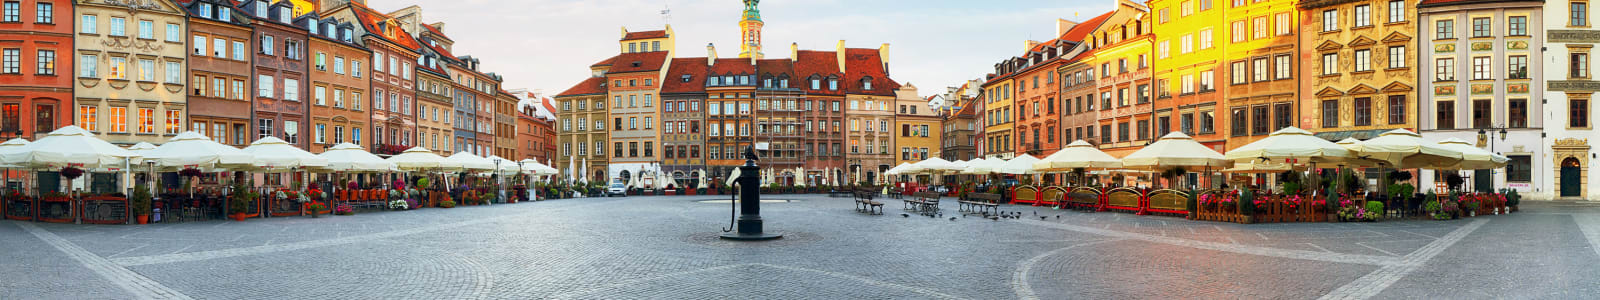 Warsaw's main square